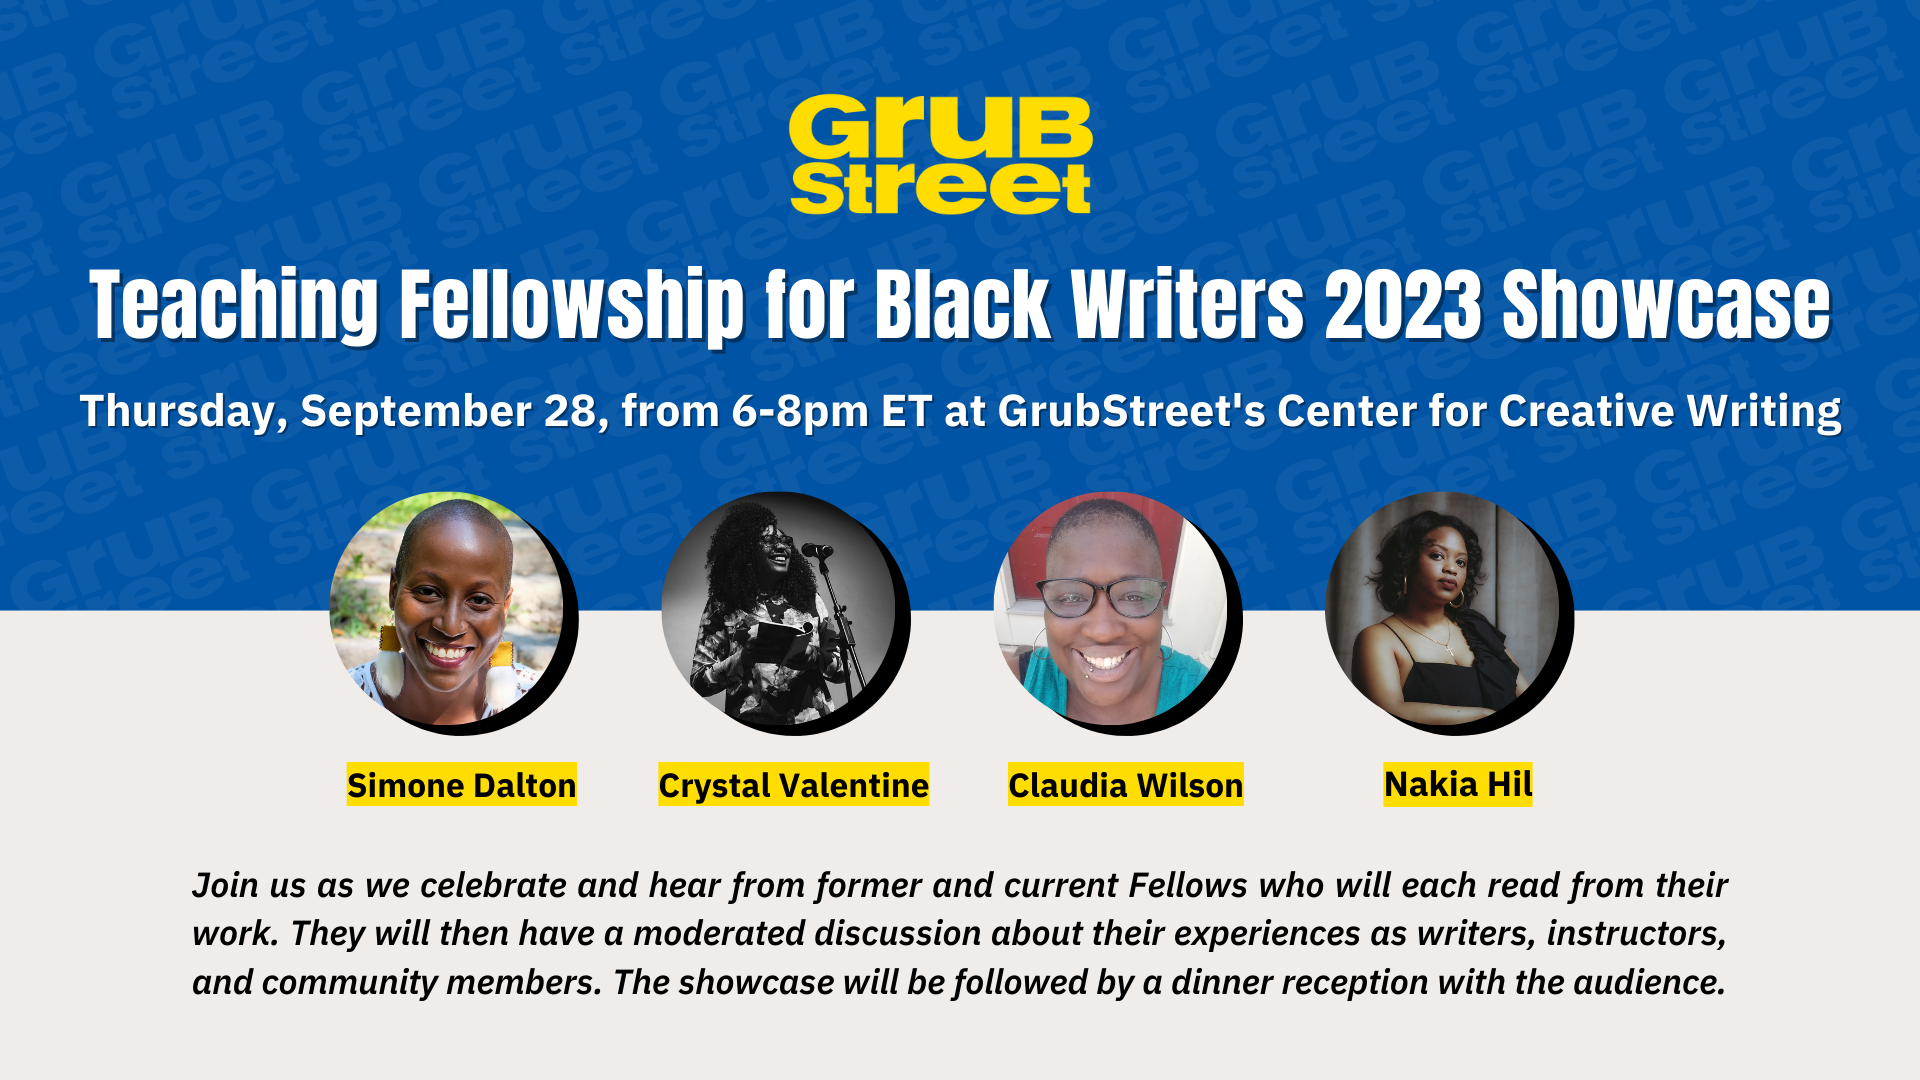 Teaching Fellowship for Black Writers 2023 Showcase event cover photo